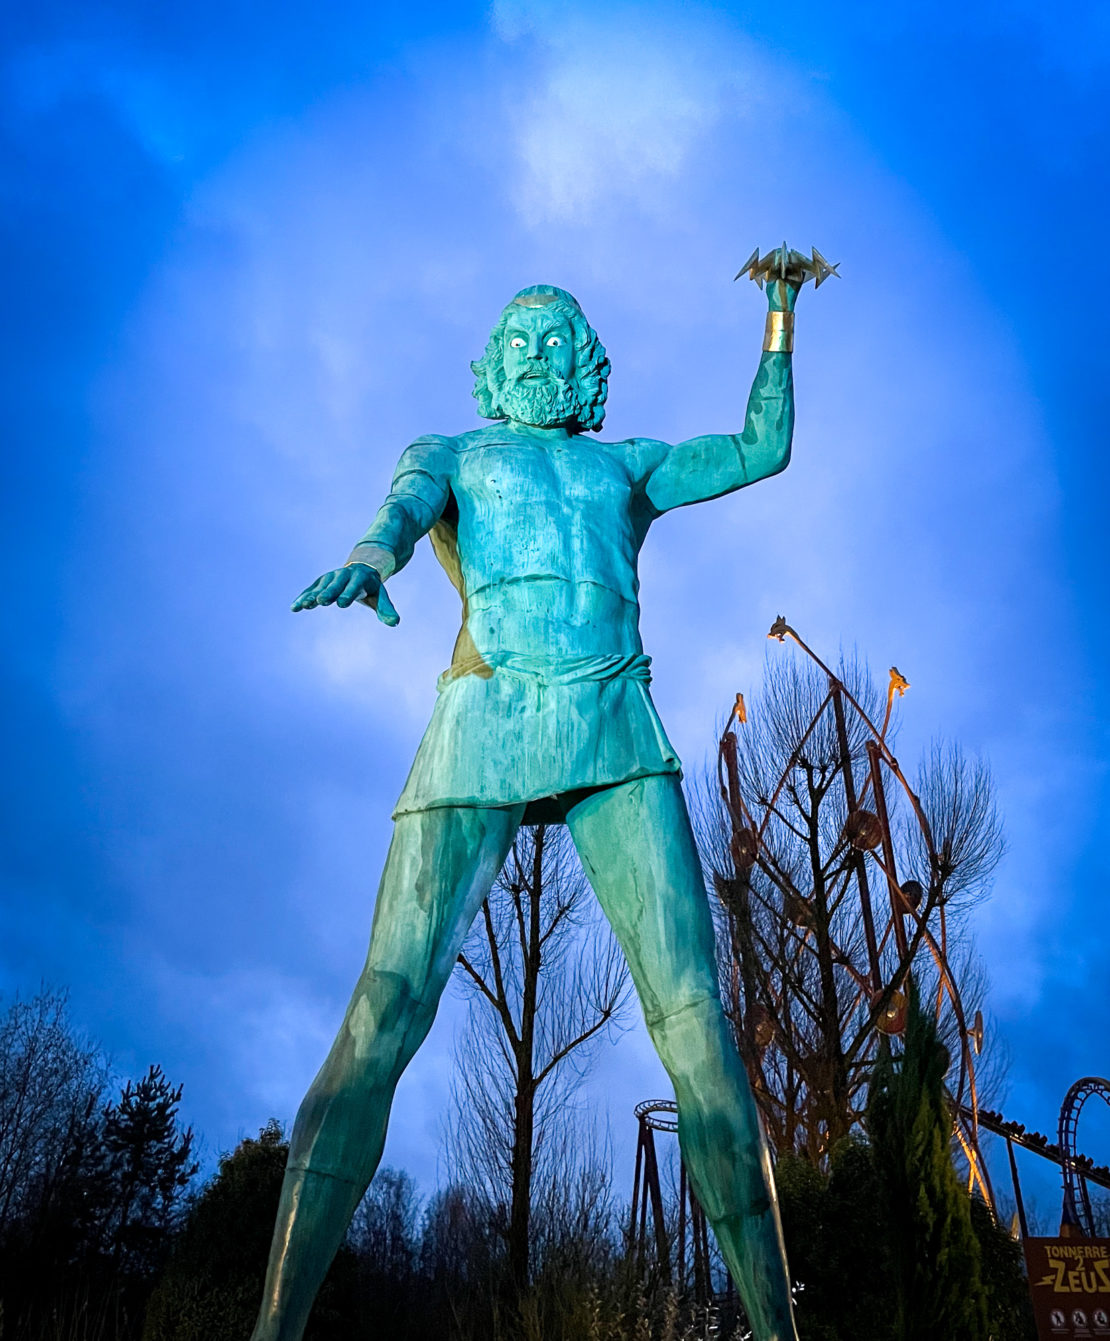 Statue of Zeus at Parc Asterix